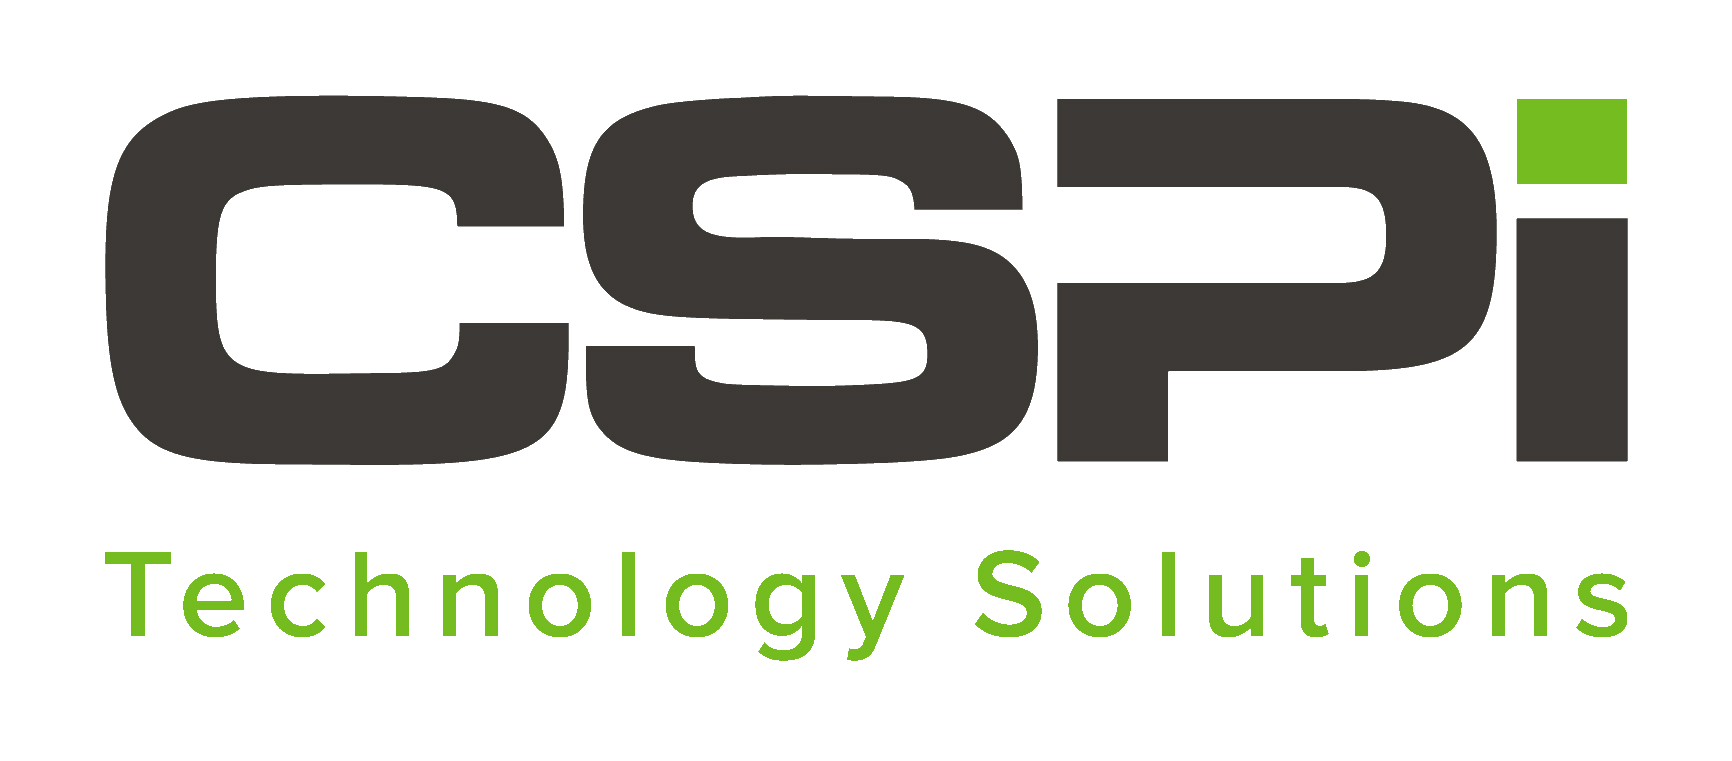 CSPi Technology Solutions logo